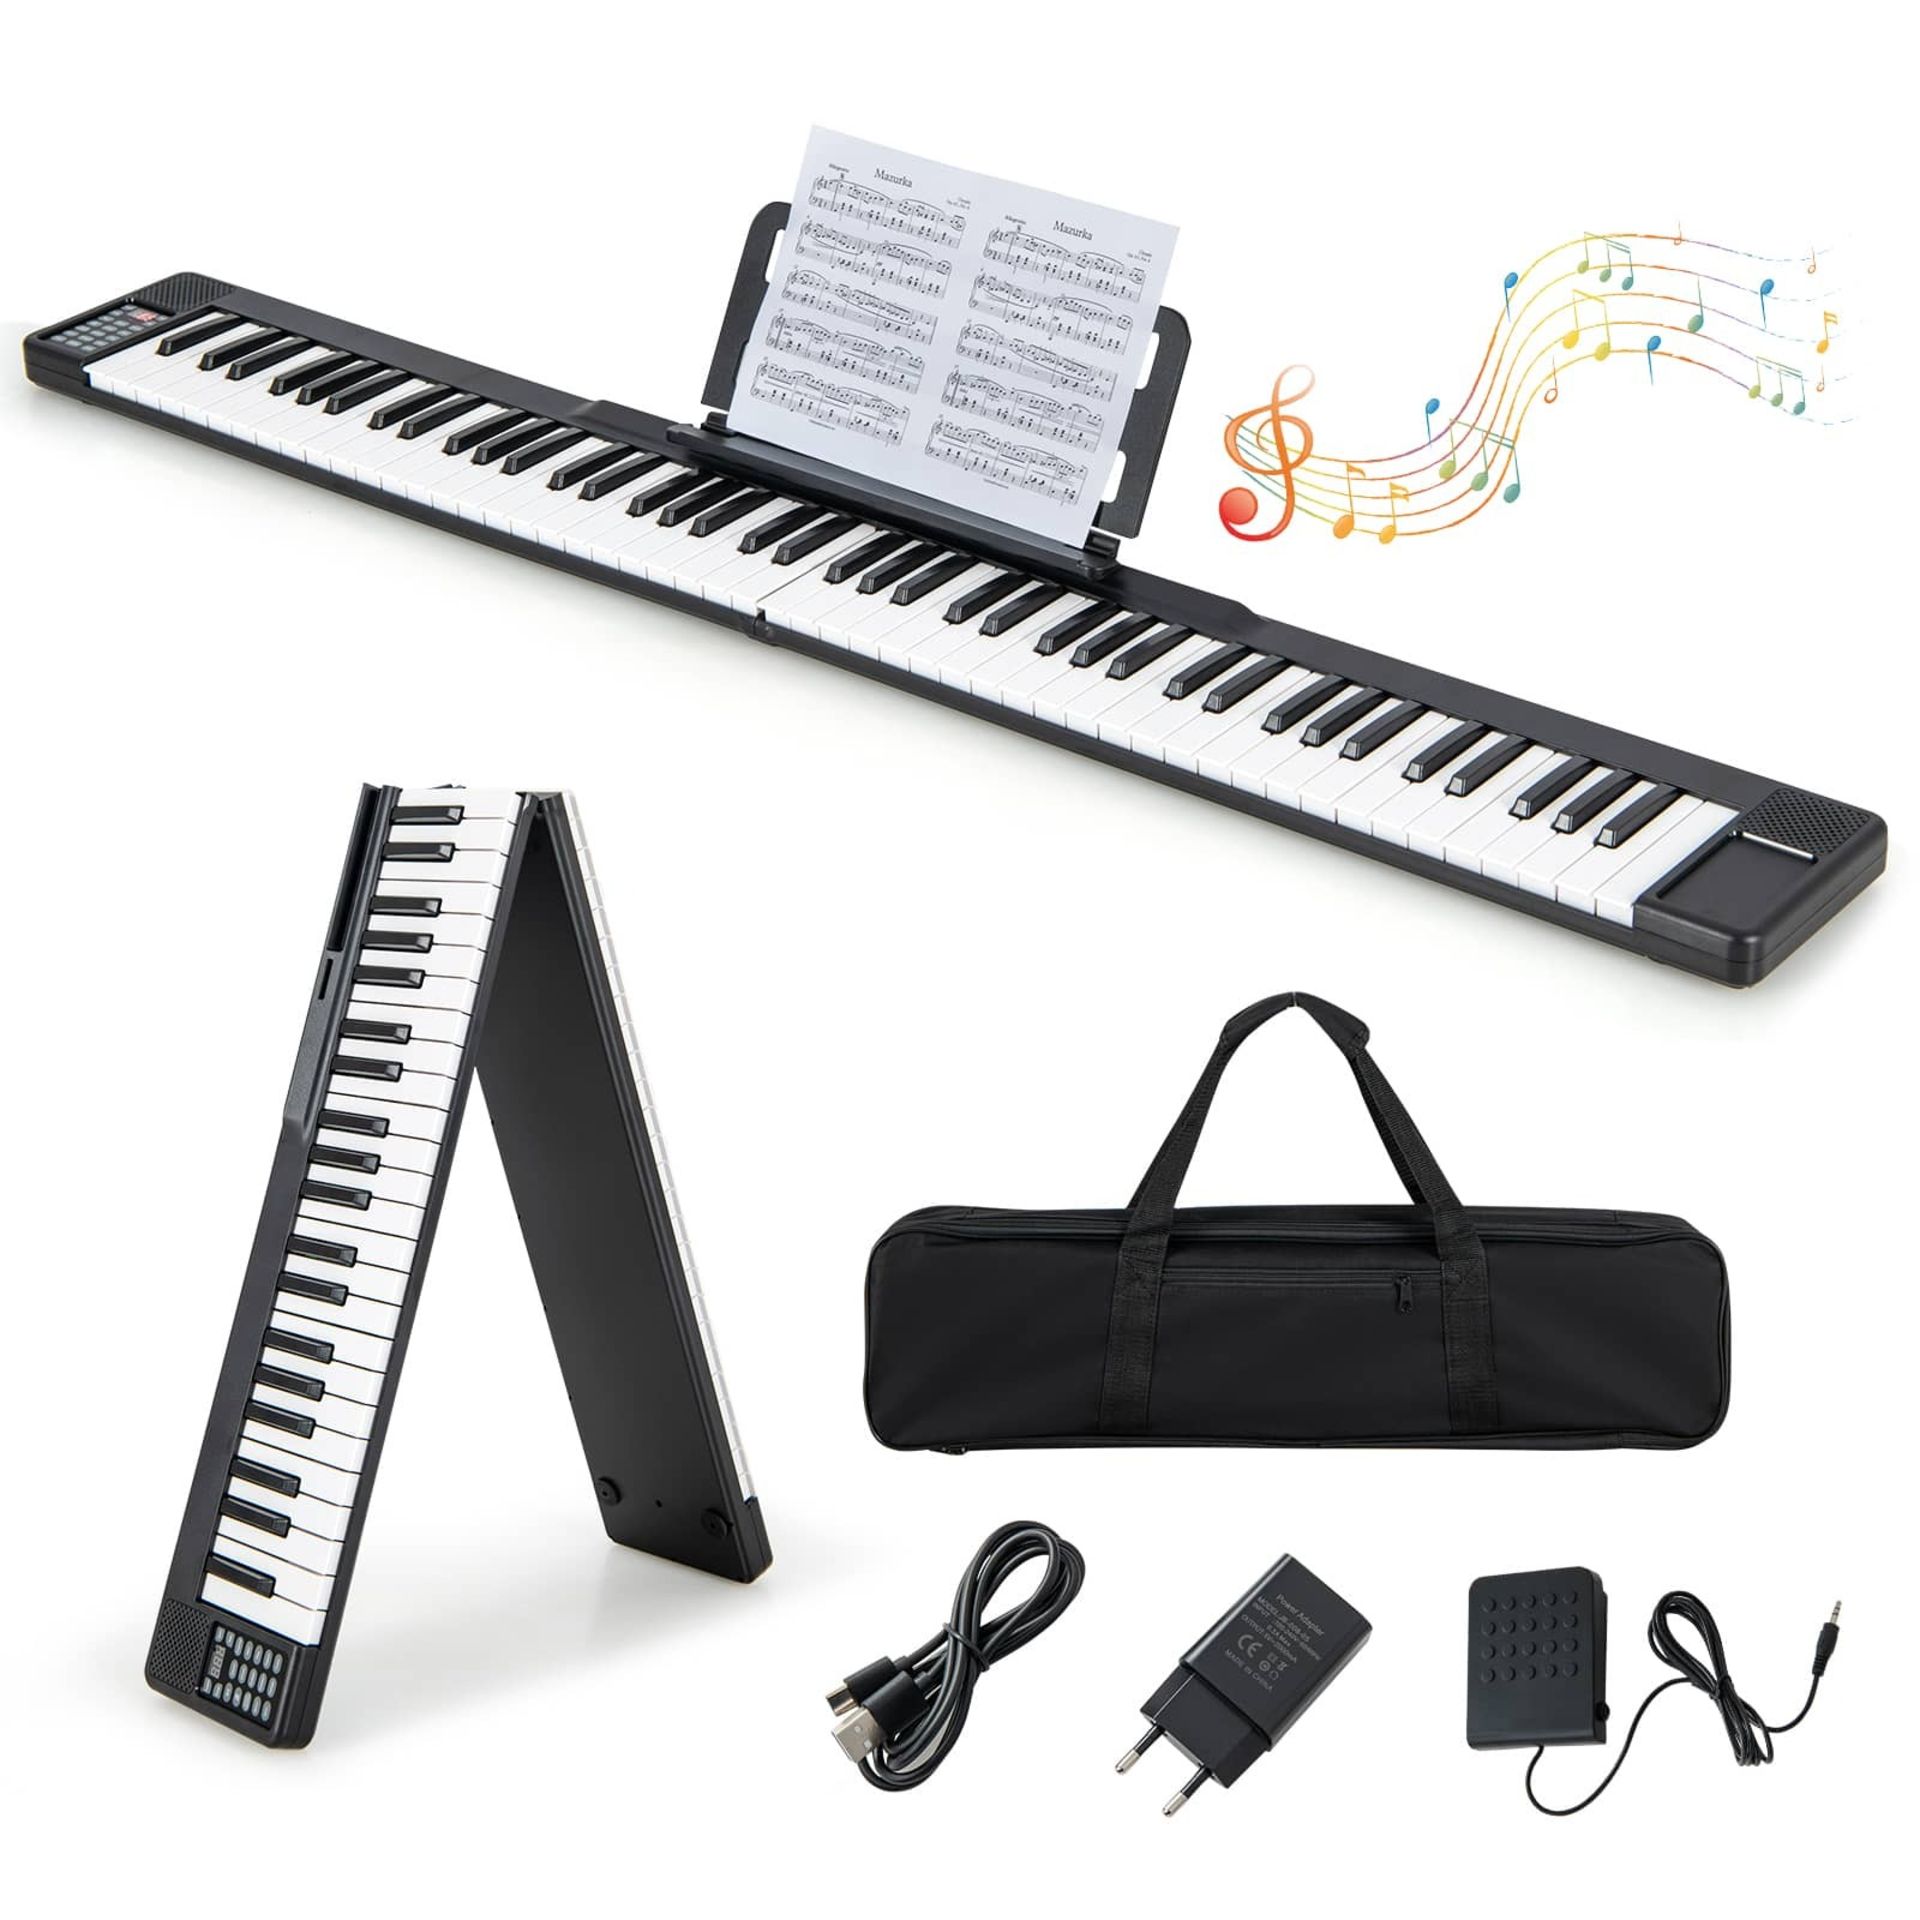 Foldable 88-Key Digital Piano for Beginners, Kids, Adults-Black - ER53